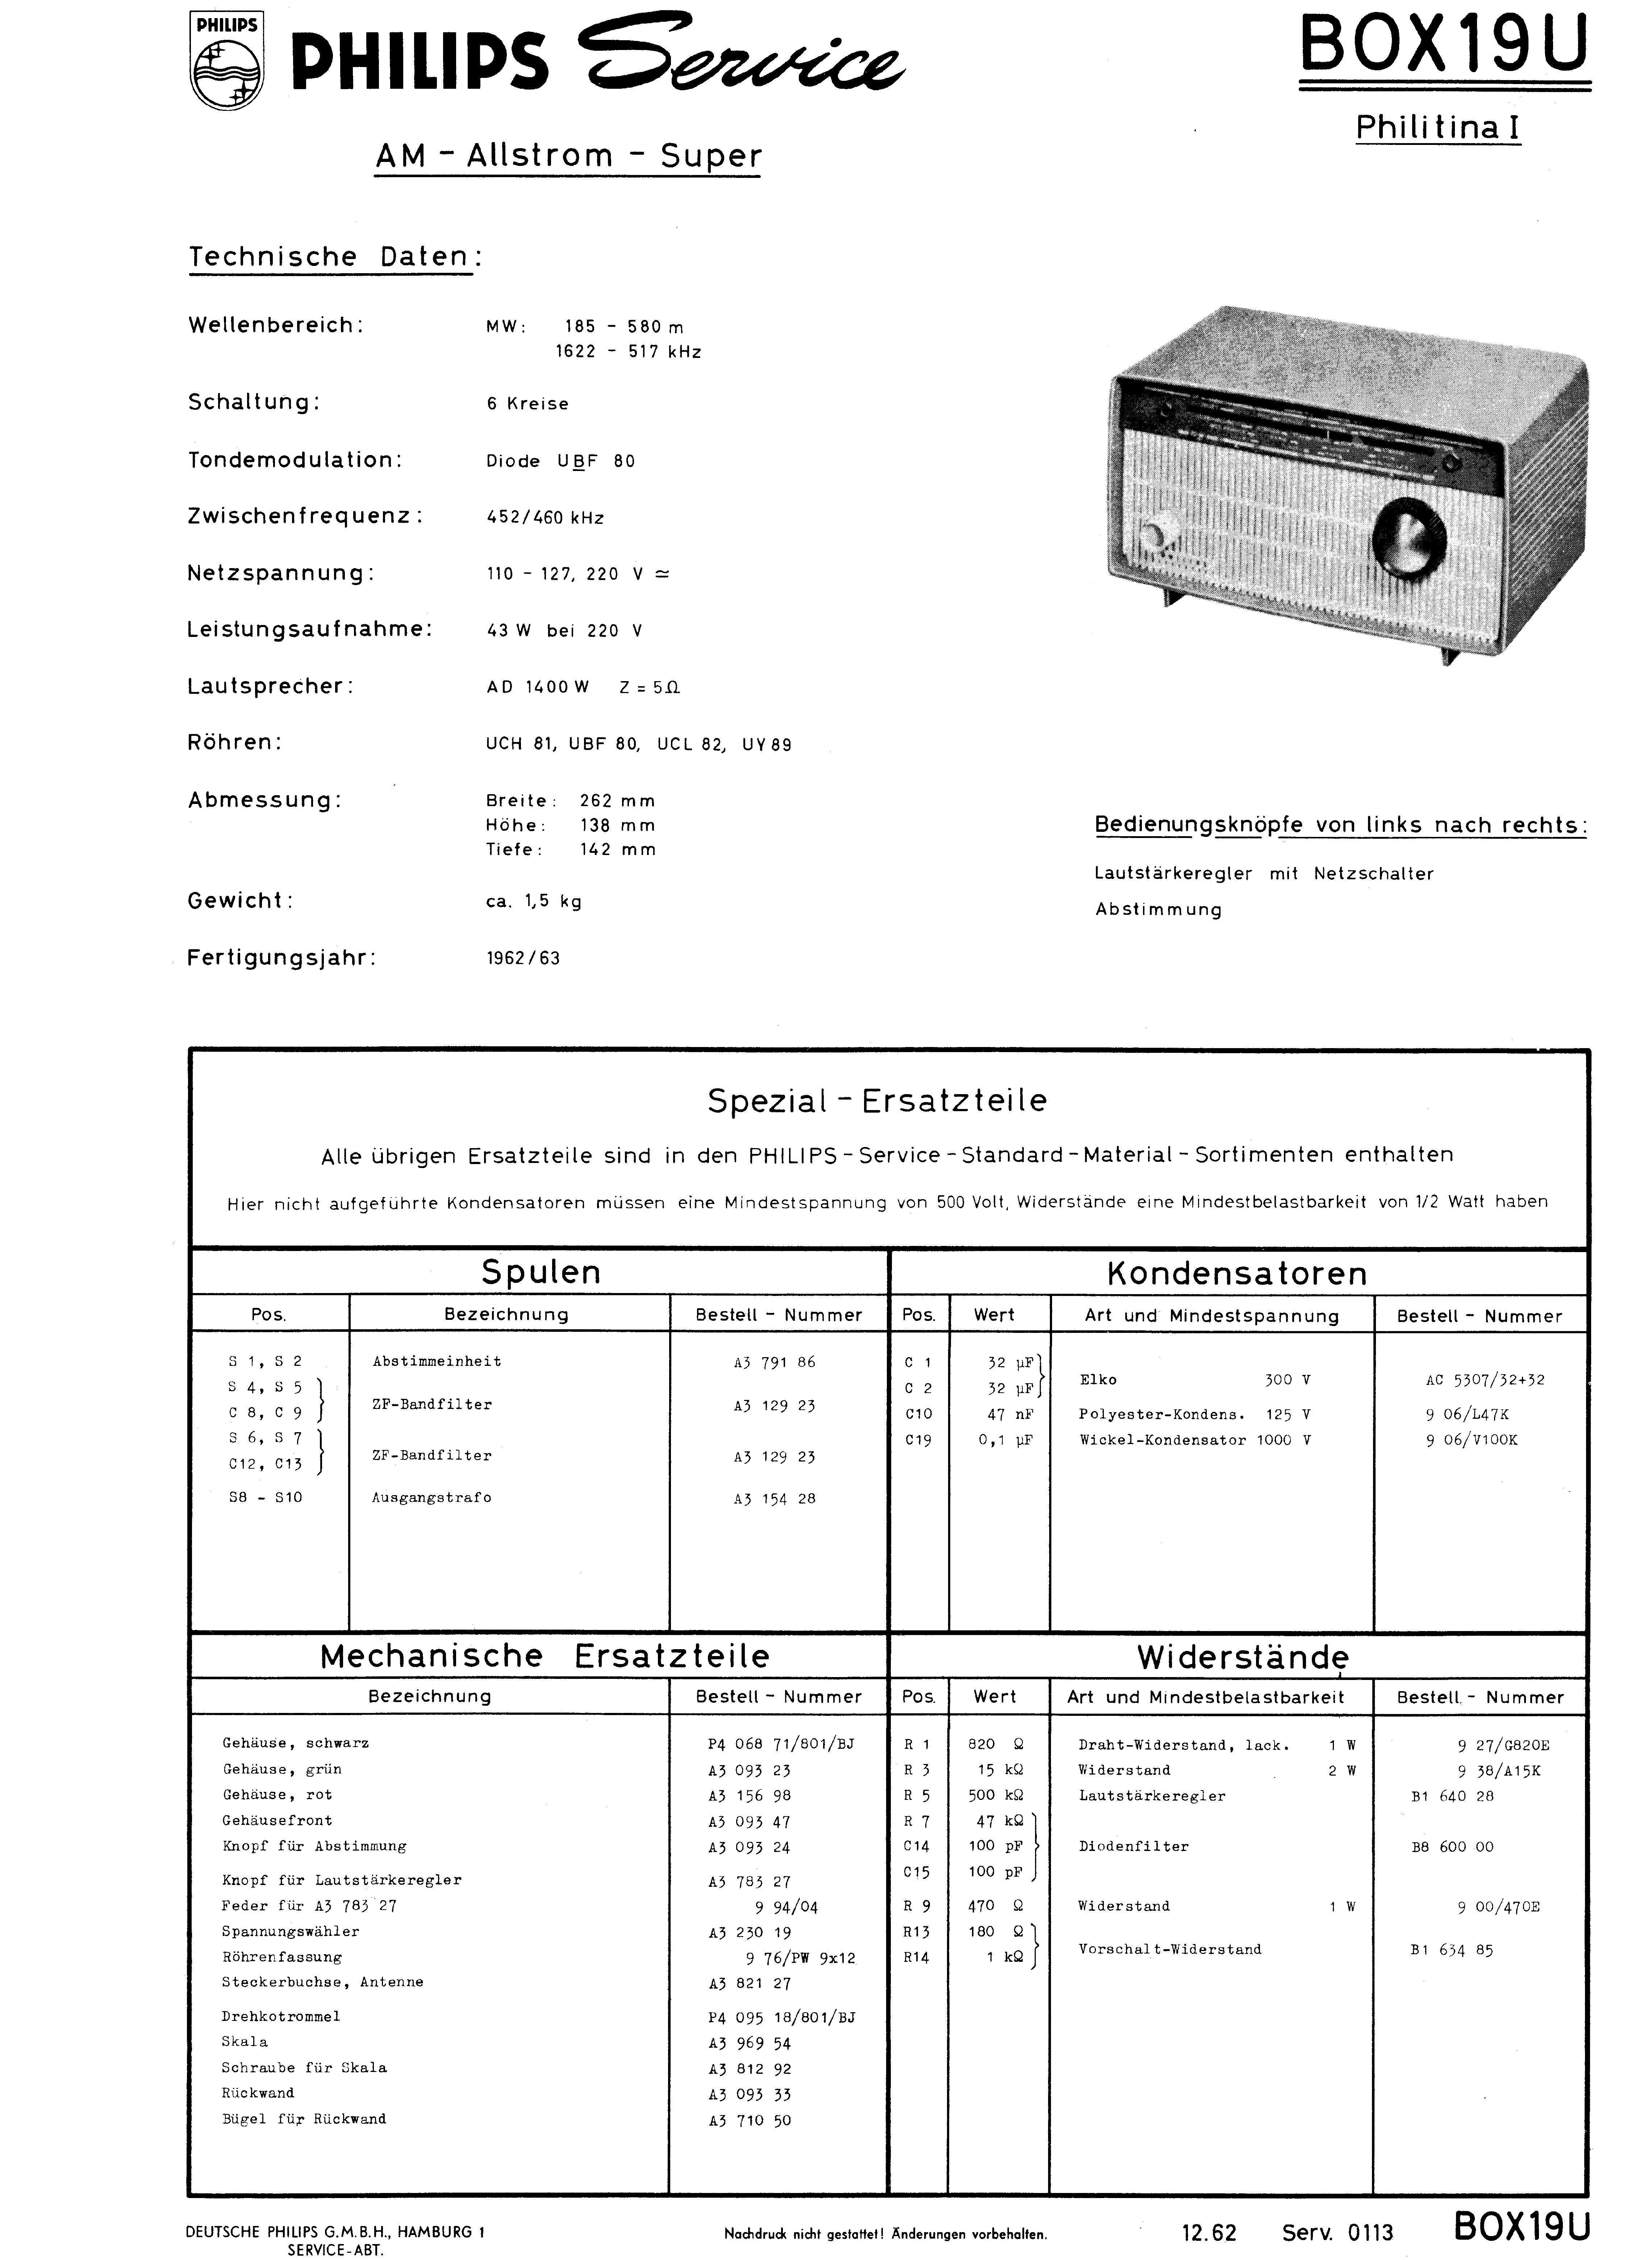 PHILIPS BOX19U SM service manual (1st page)